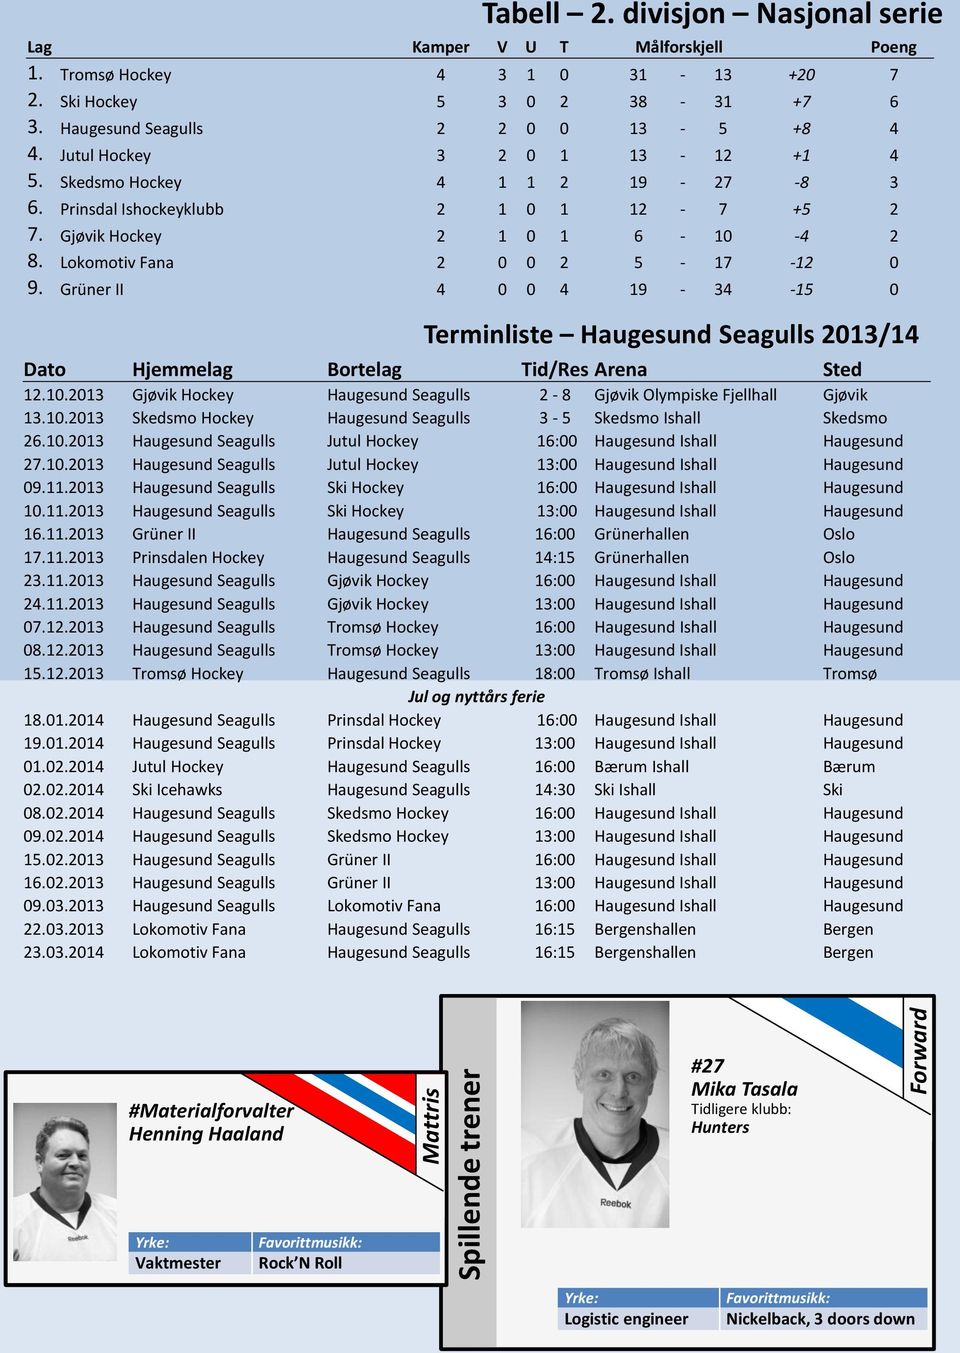 Lokomotiv Fana 2 0 0 2 5-17 -12 0 9. Grüner II 4 0 0 4 19-34 -15 0 Terminliste Haugesund Seagulls 2013/14 Dato Hjemmelag Bortelag Tid/Res Arena Sted 12.10.